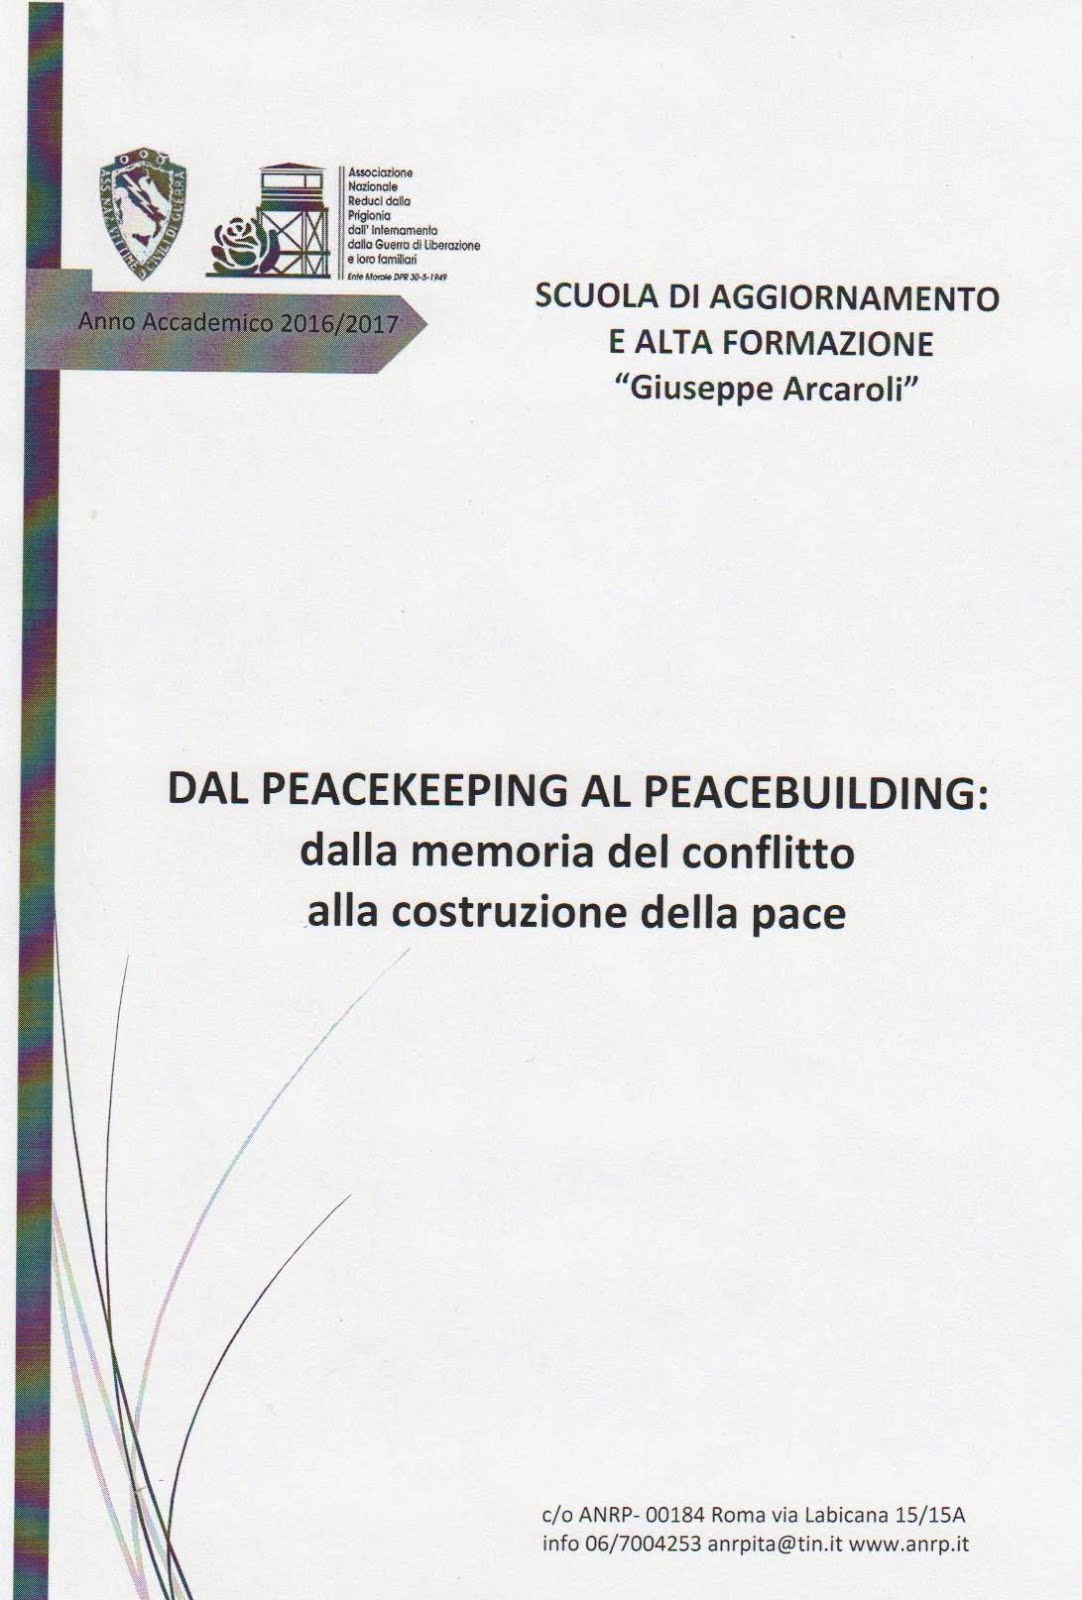 Dal Peacekeeping al Peacebuilding